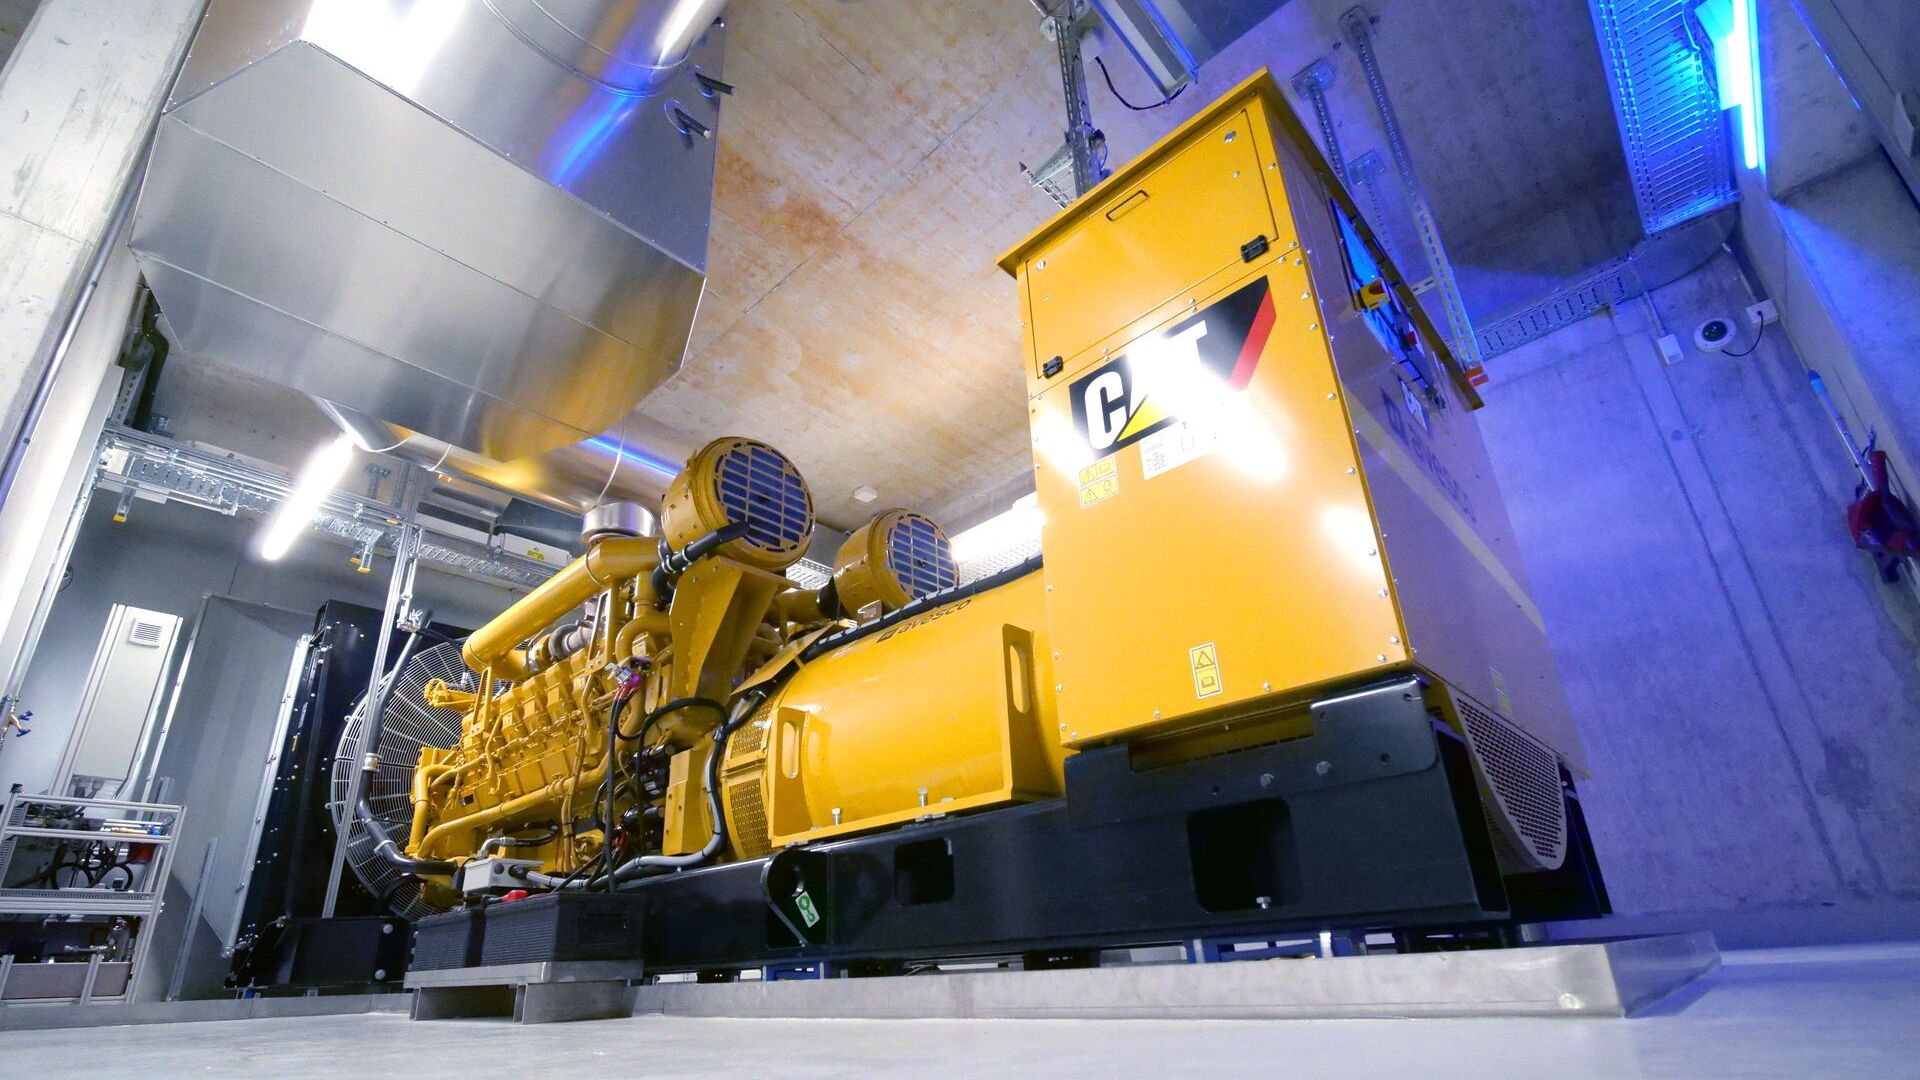 Generator diesel Rechenzentrum Ostschweiz di Gais di Appenzell Ausserrhoden